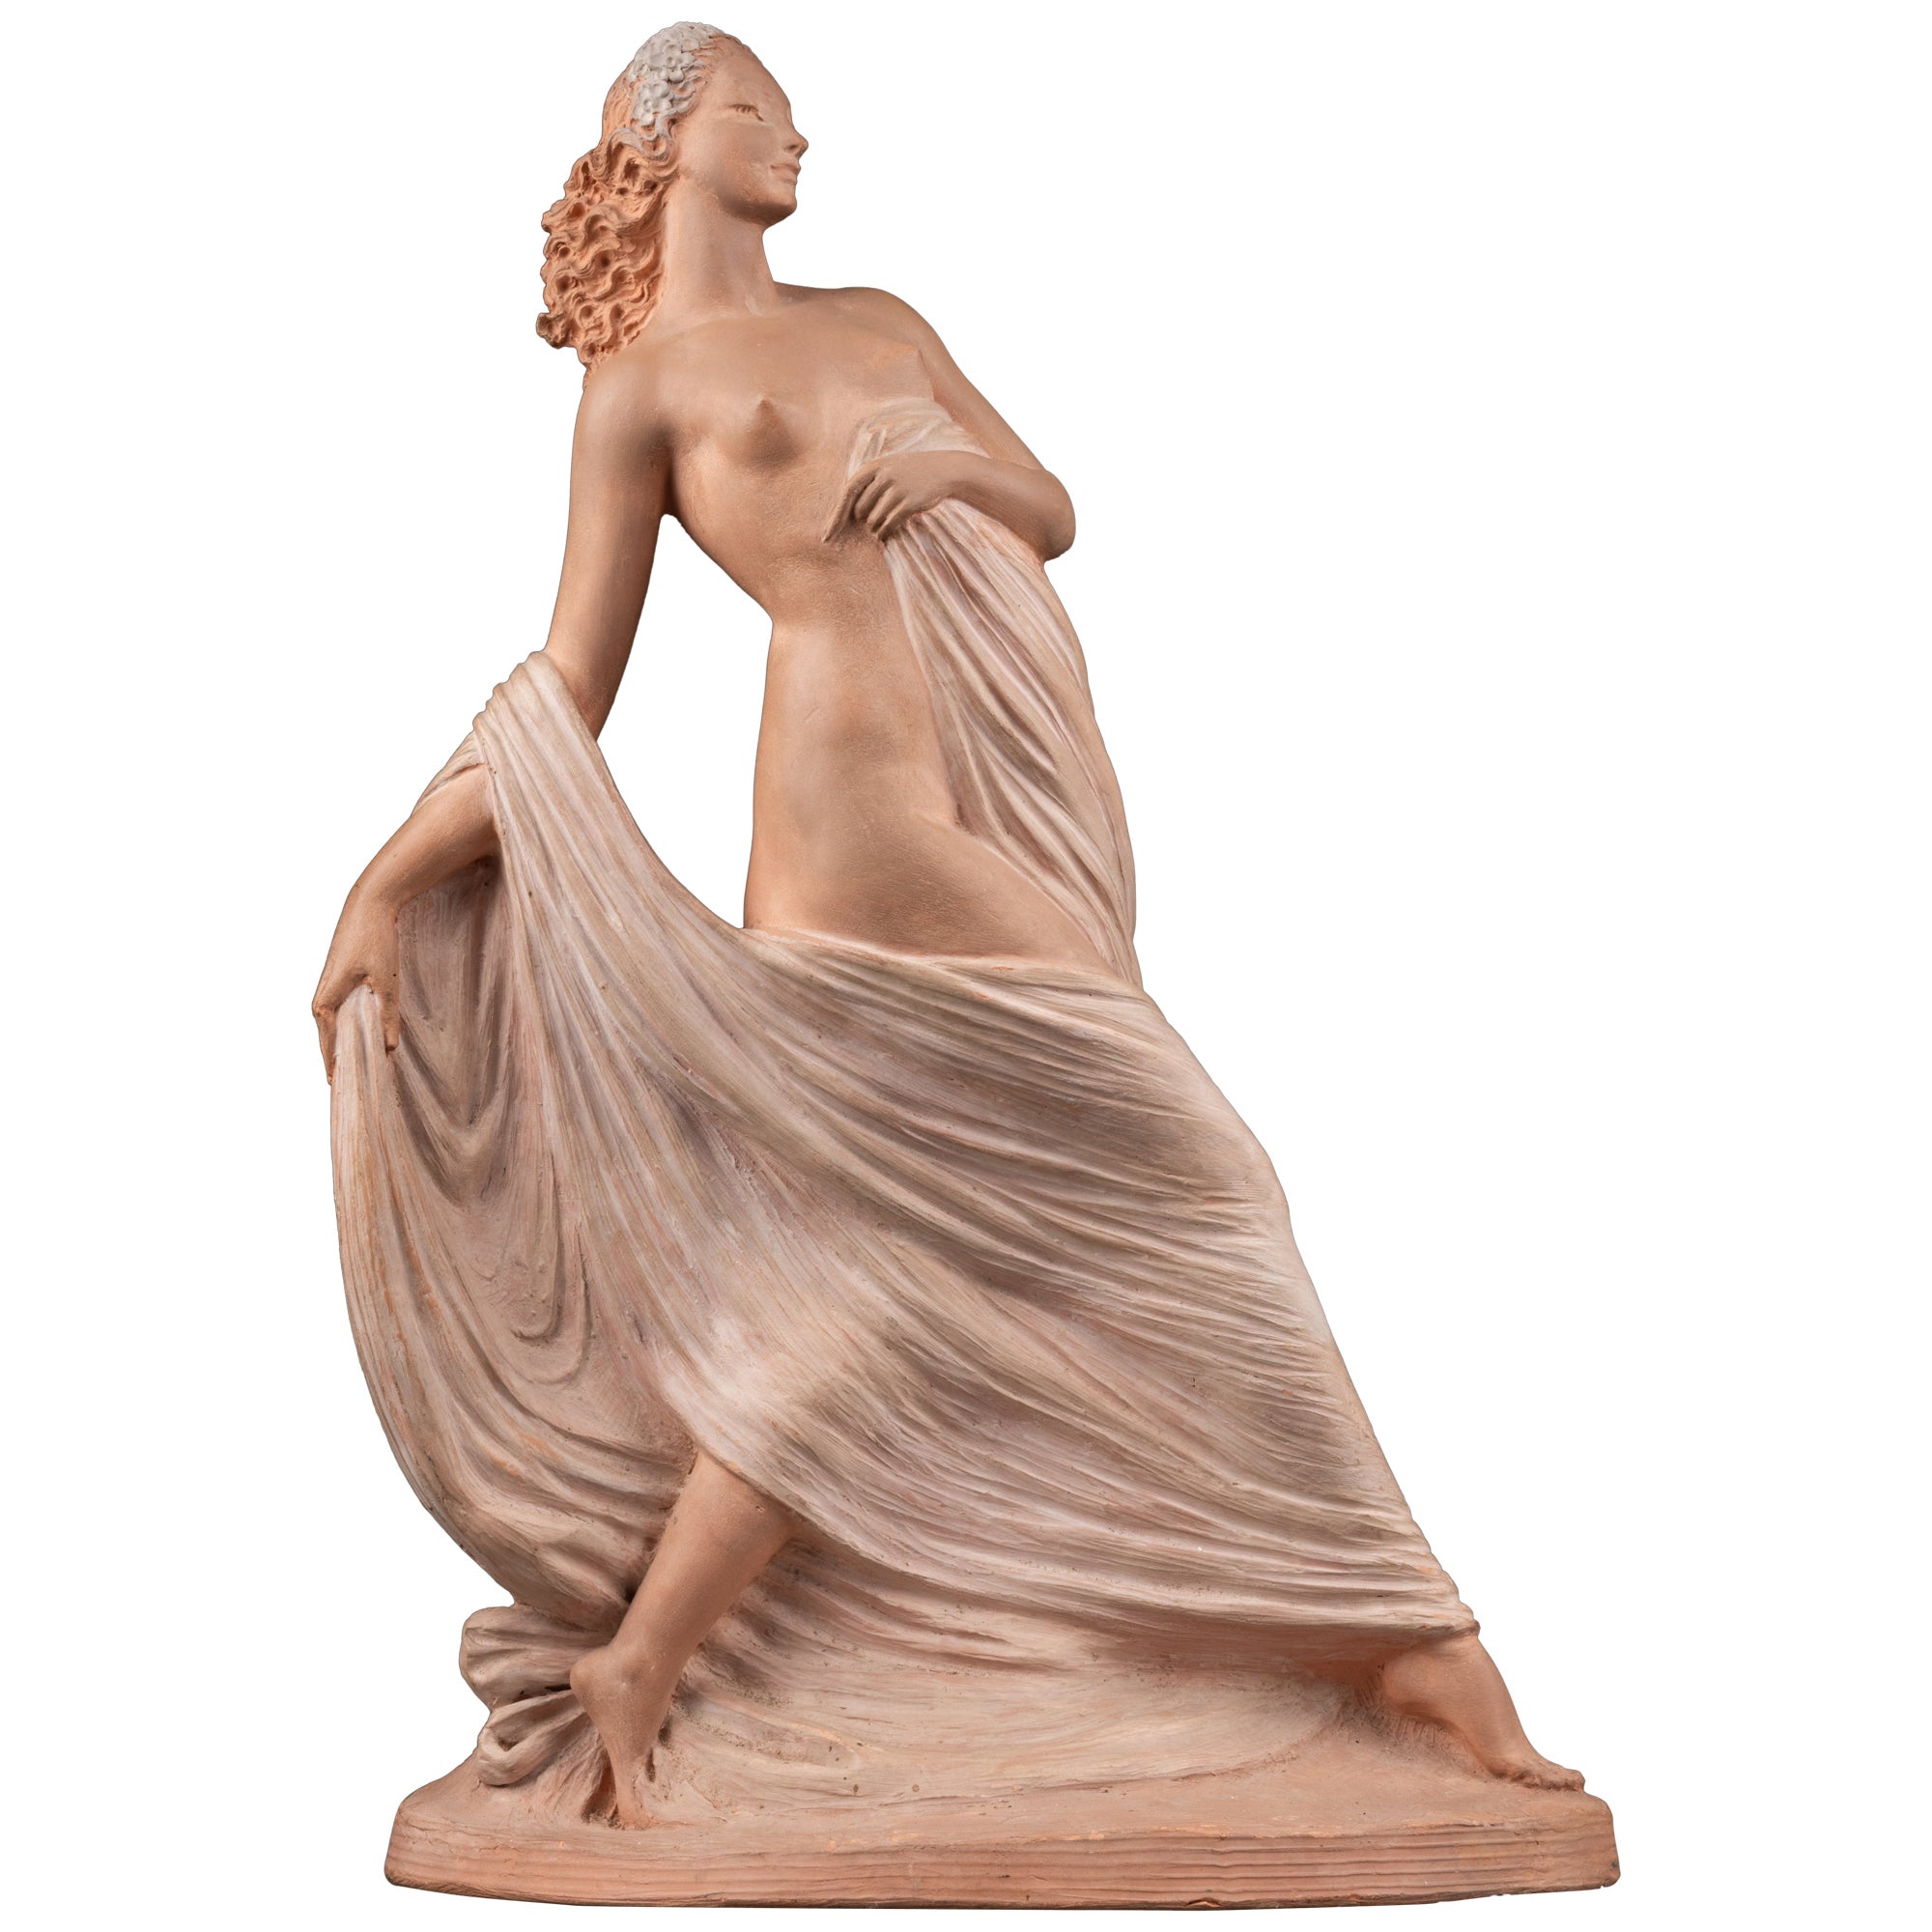 Joe Descomps dit "Cormier": "Woman removing a veil", Terracota sculpture, C.1940